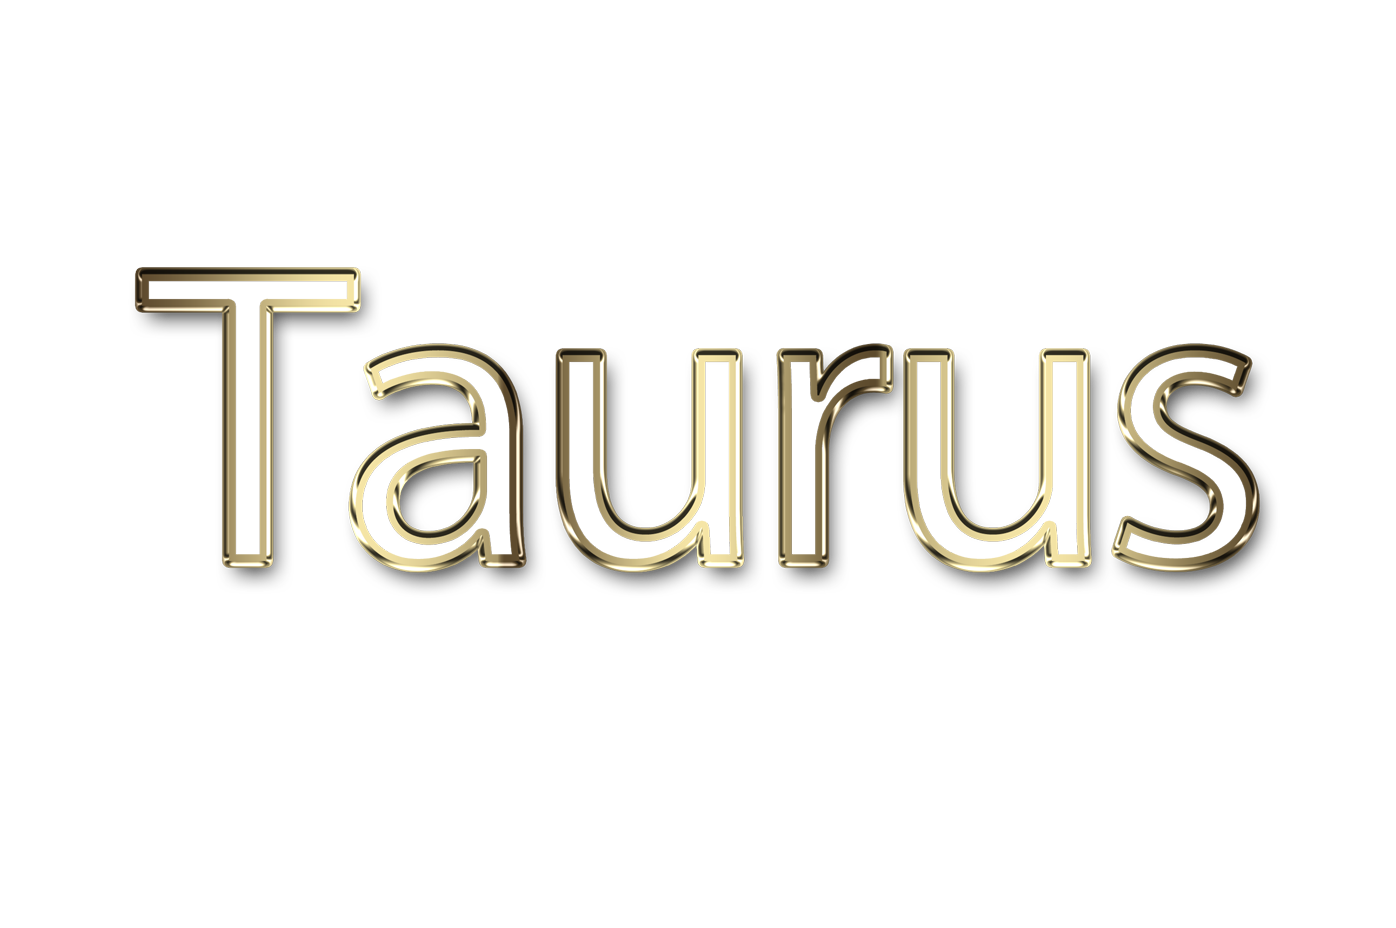 Taurus png, word Taurus png, Taurus word png, Taurus text png, Taurus letters png, Taurus word art typography PNG images, transparent png